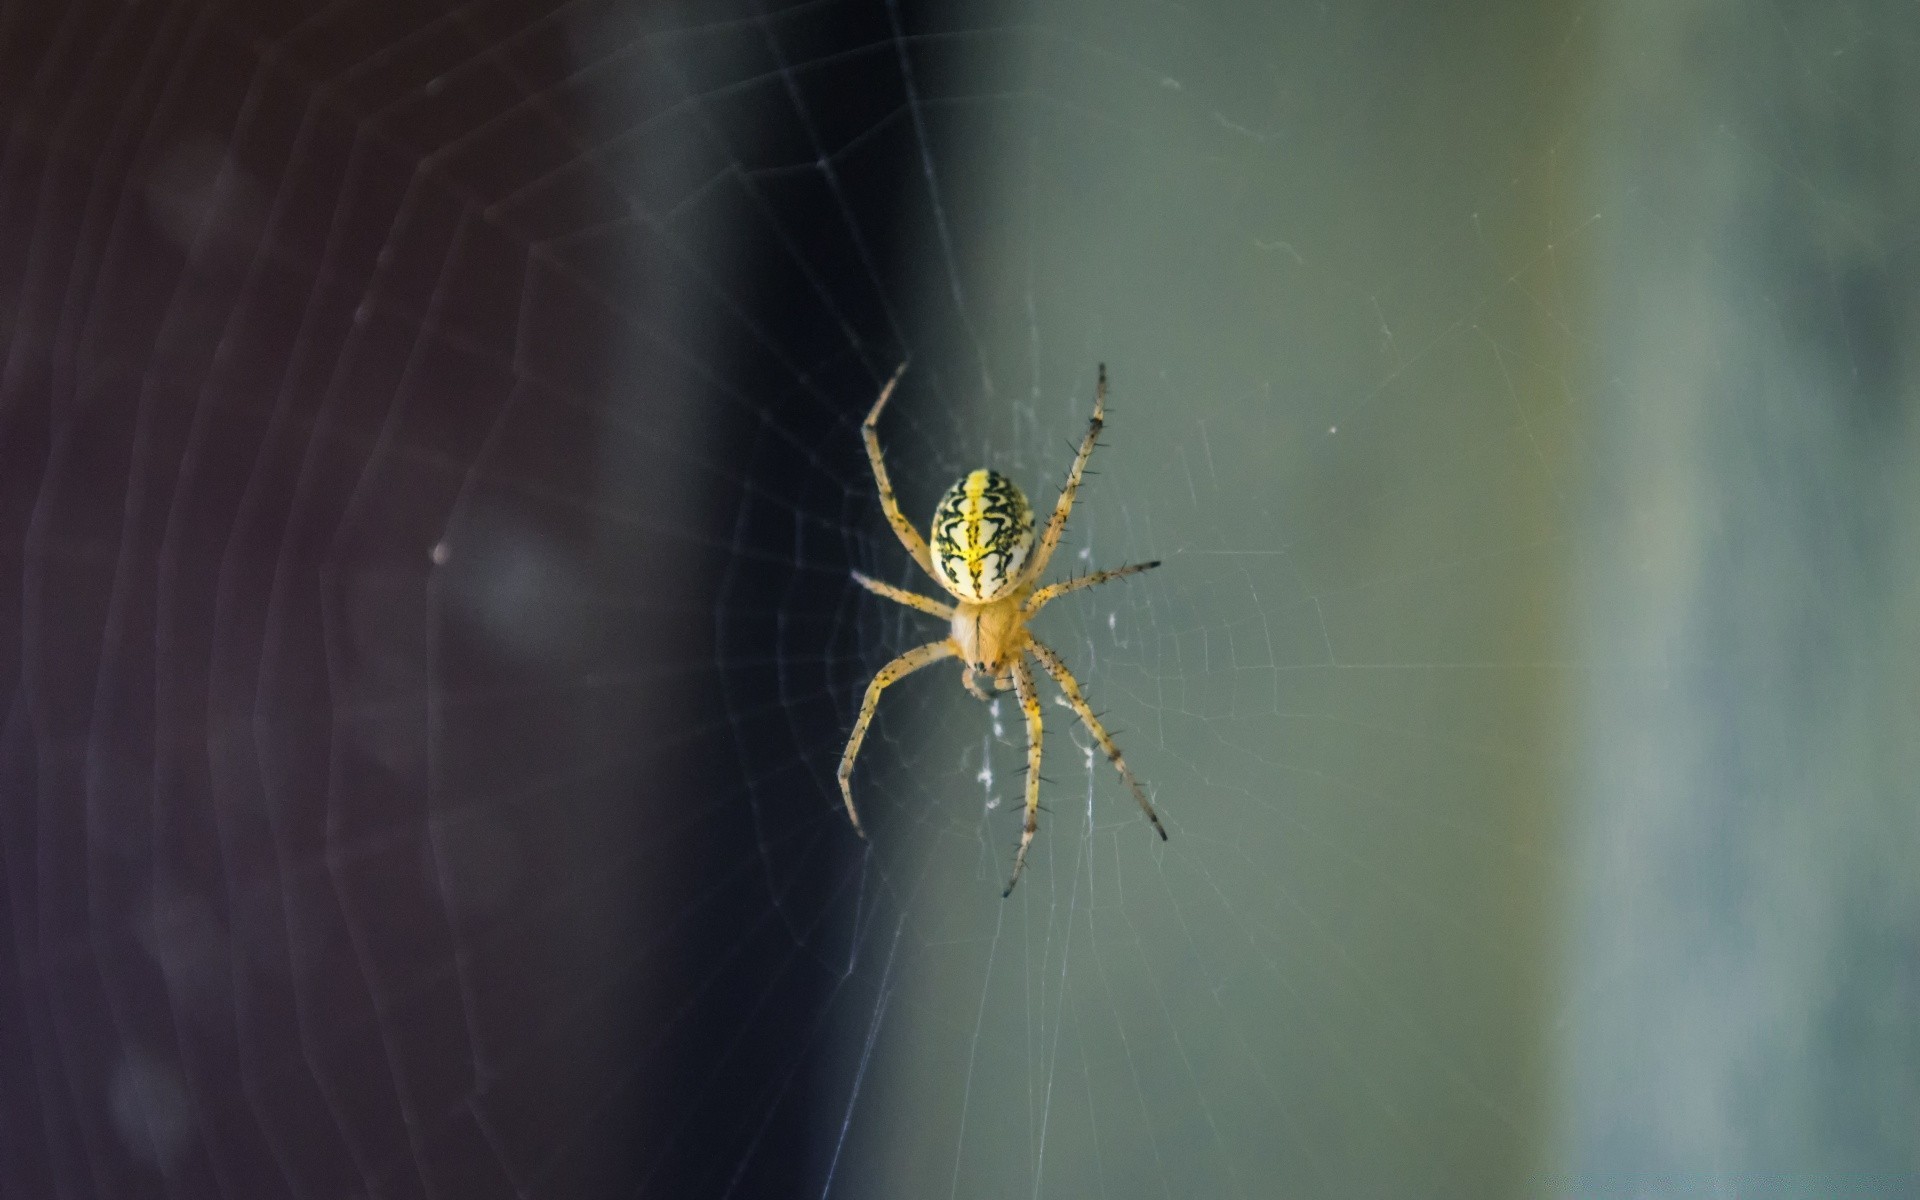 insects spider arachnid spiderweb insect trap cobweb creepy web invertebrate fear scary phobia eerie poison danger horror skittish